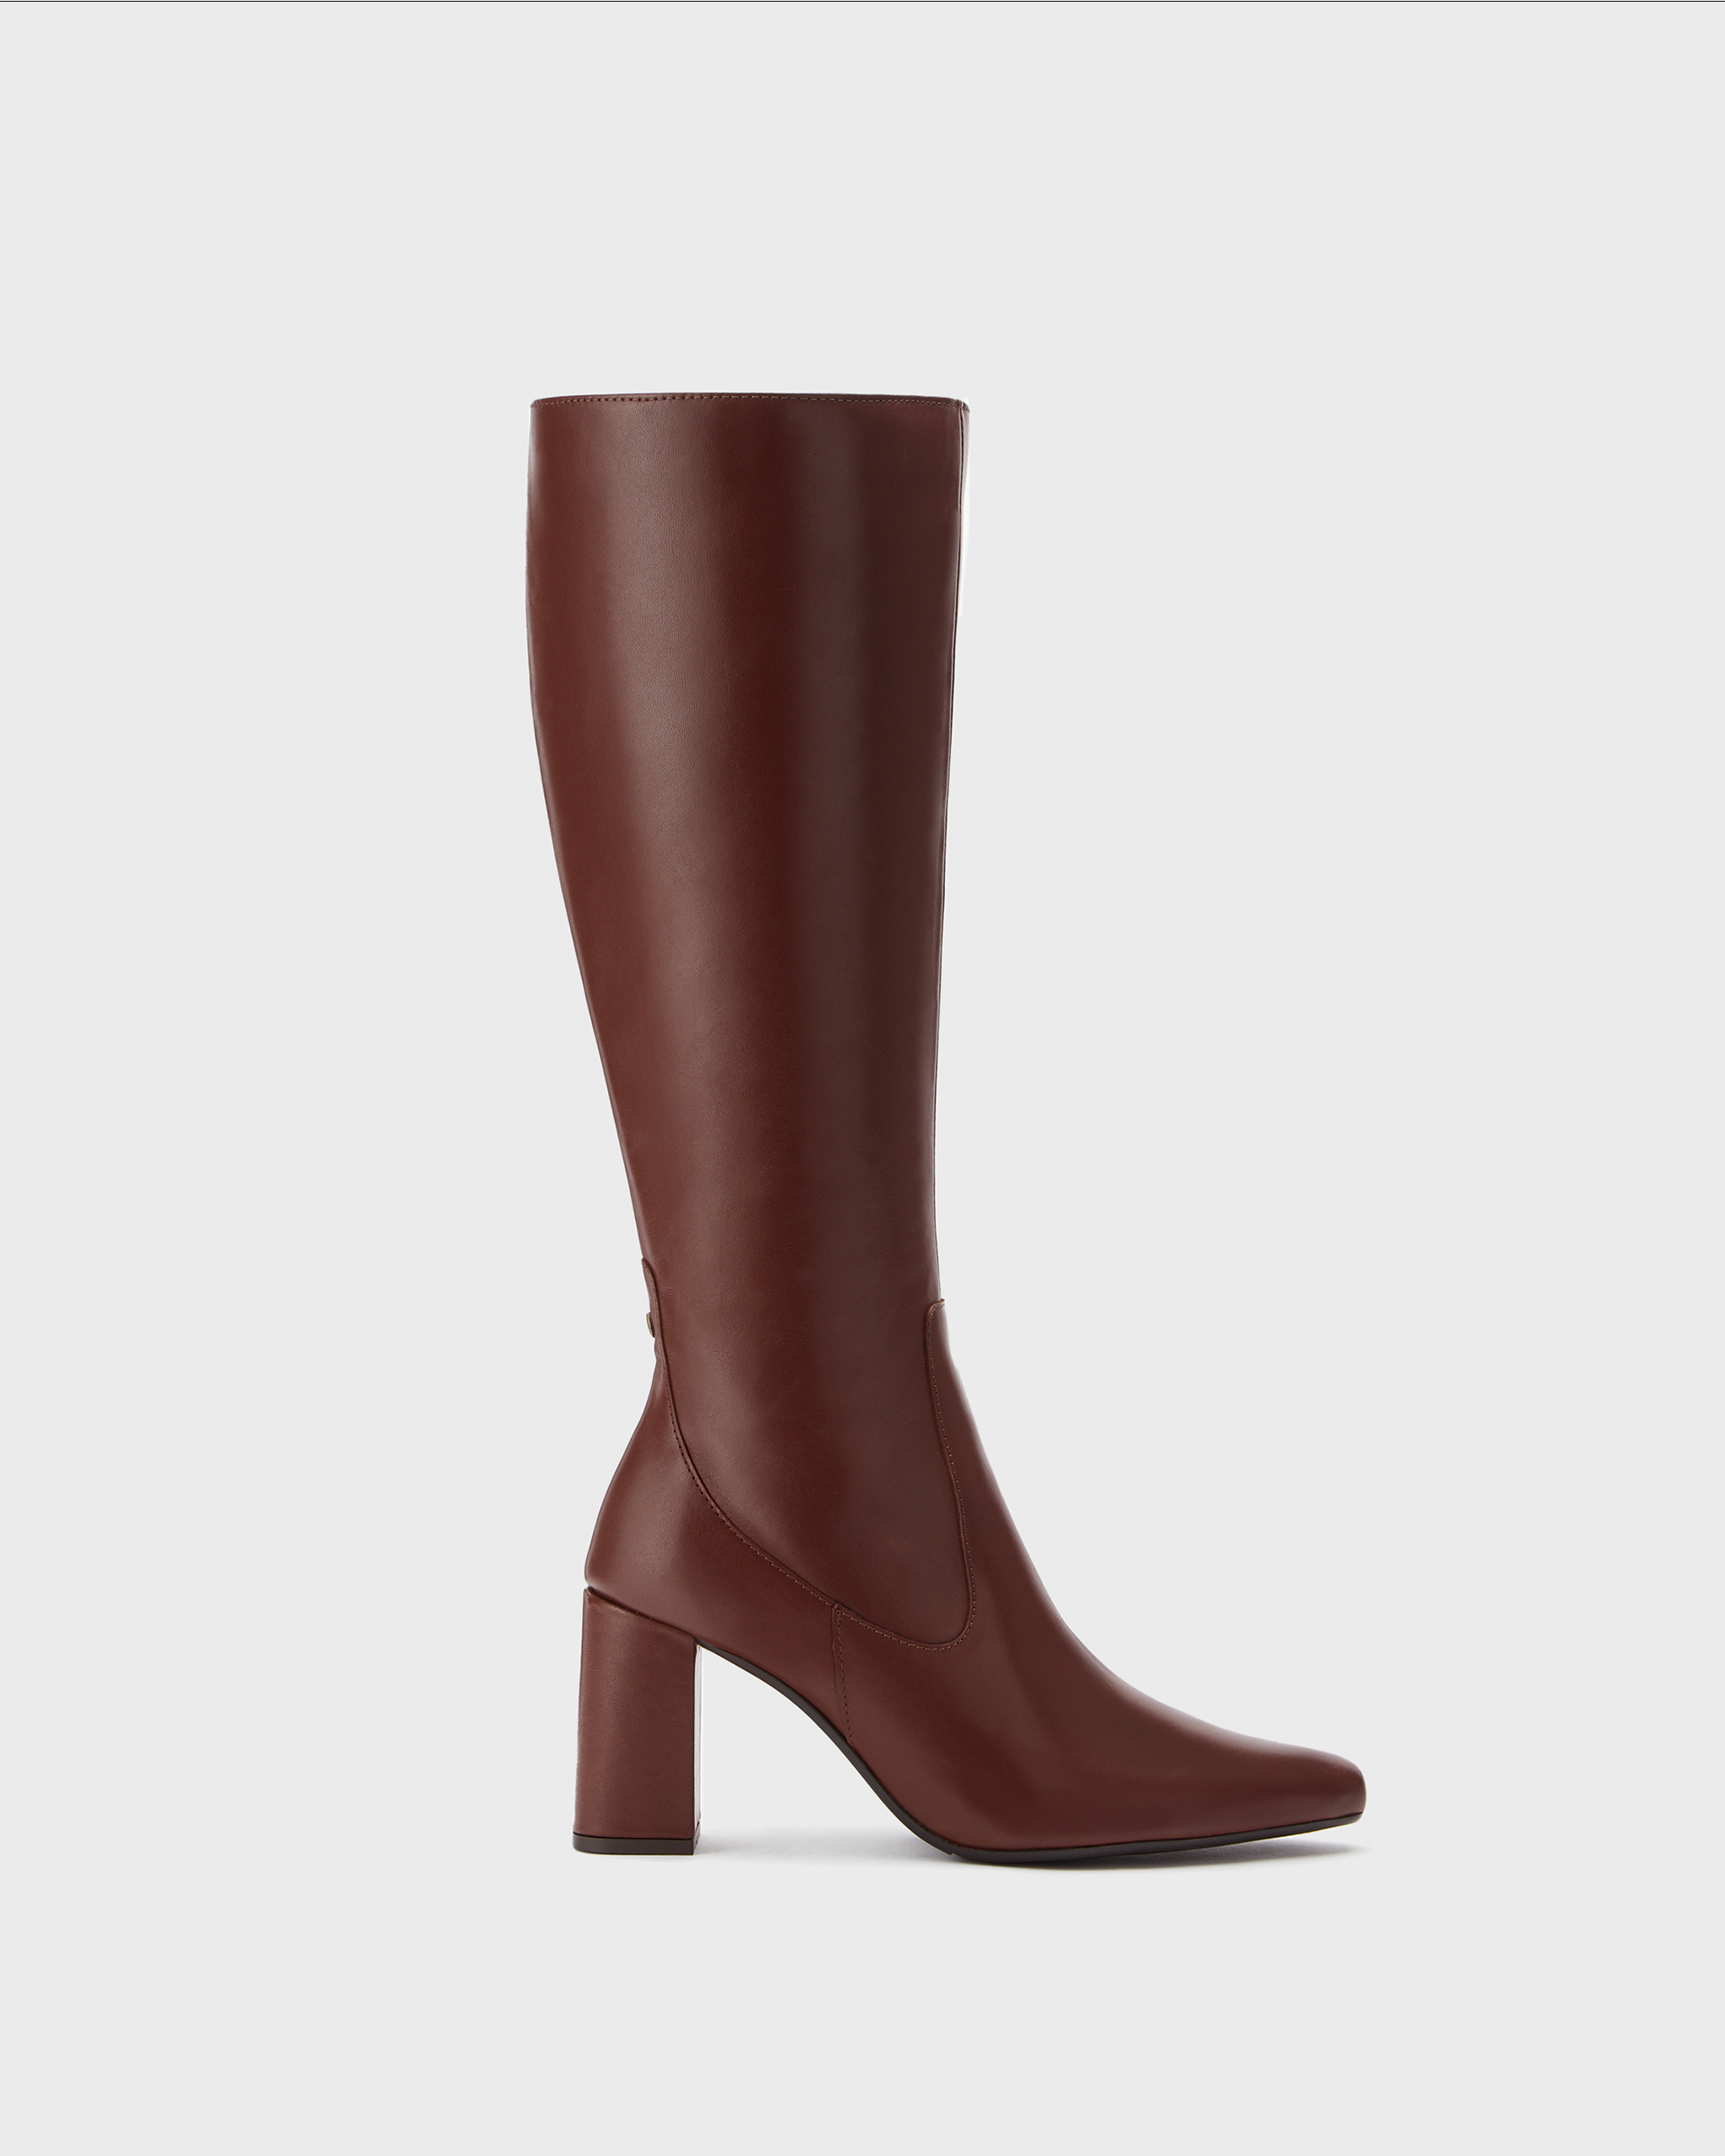 Knee high pointed brown block heeled boot